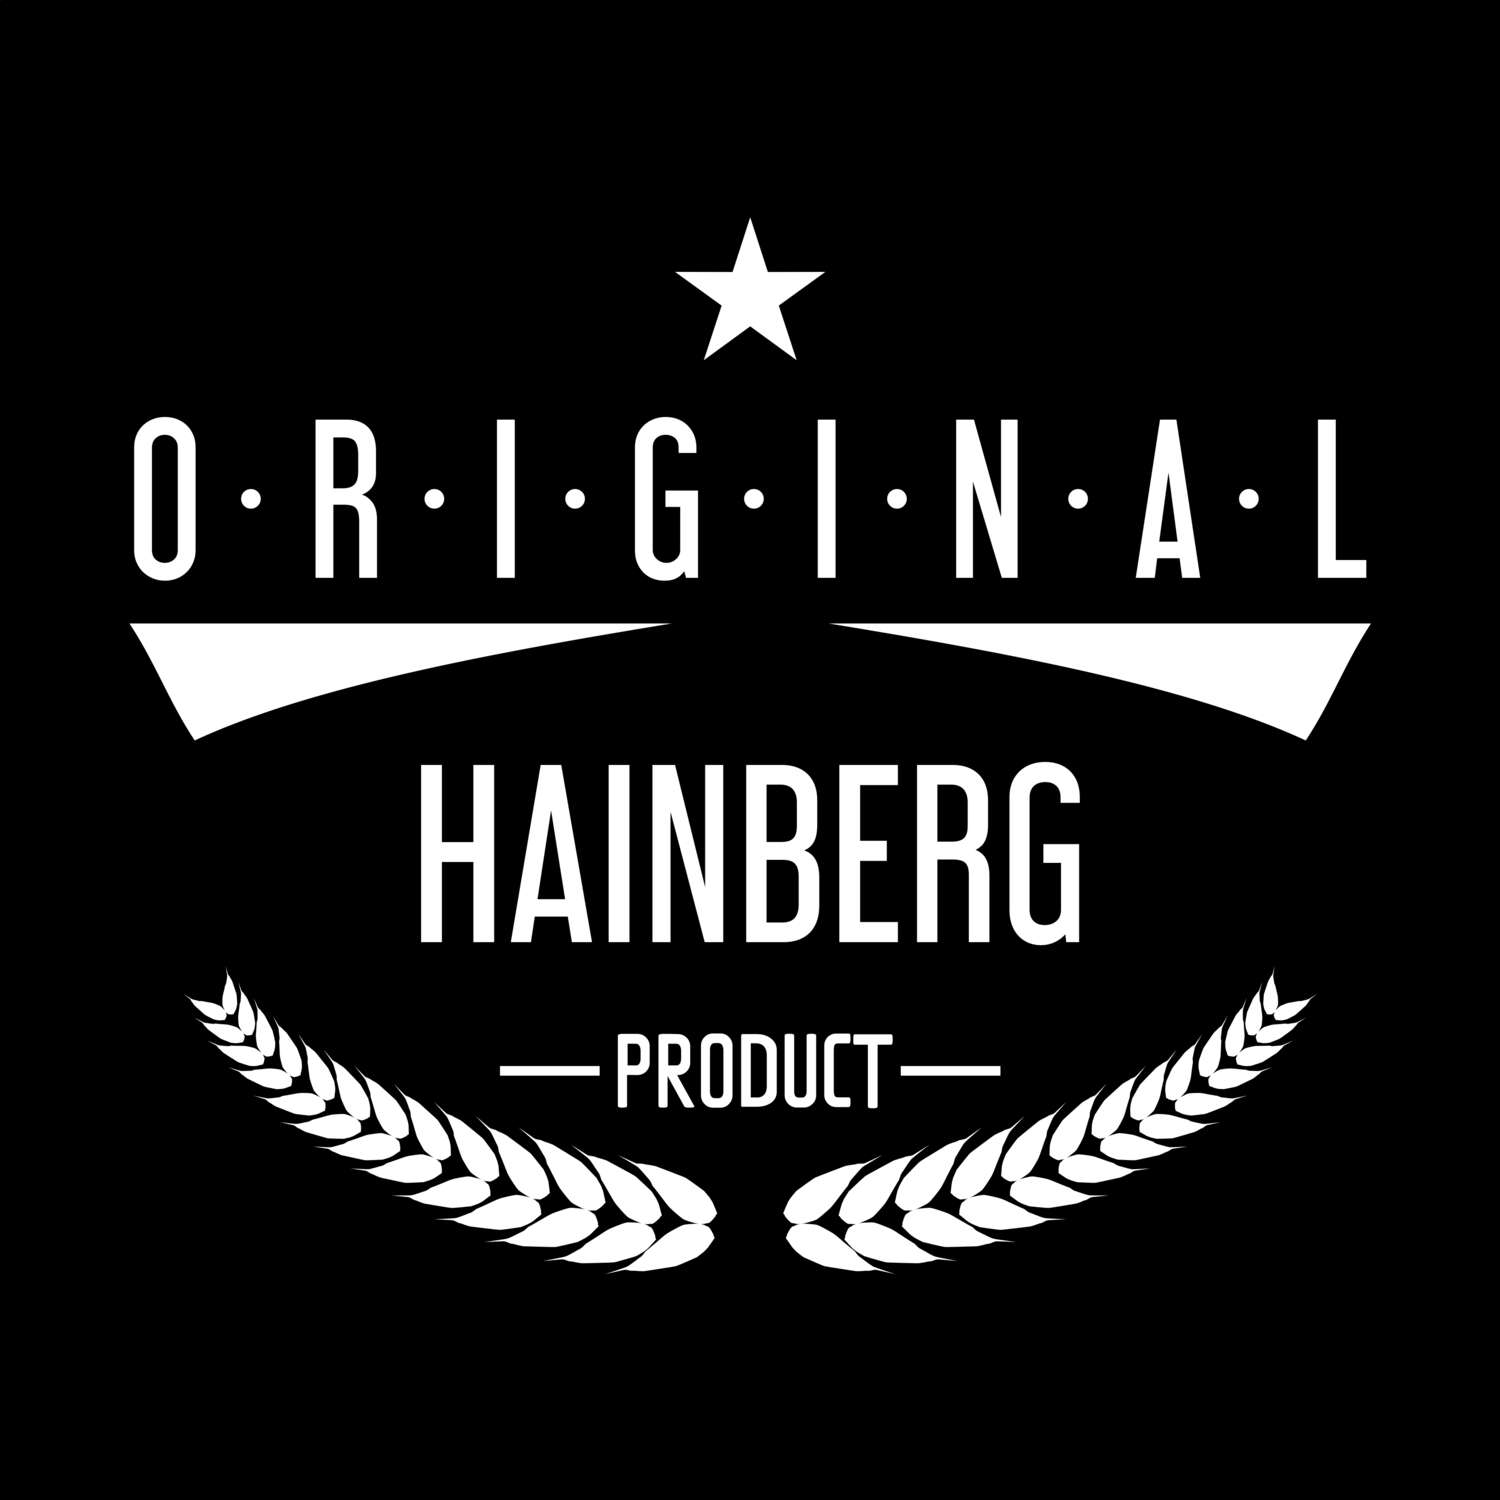 Hainberg T-Shirt »Original Product«